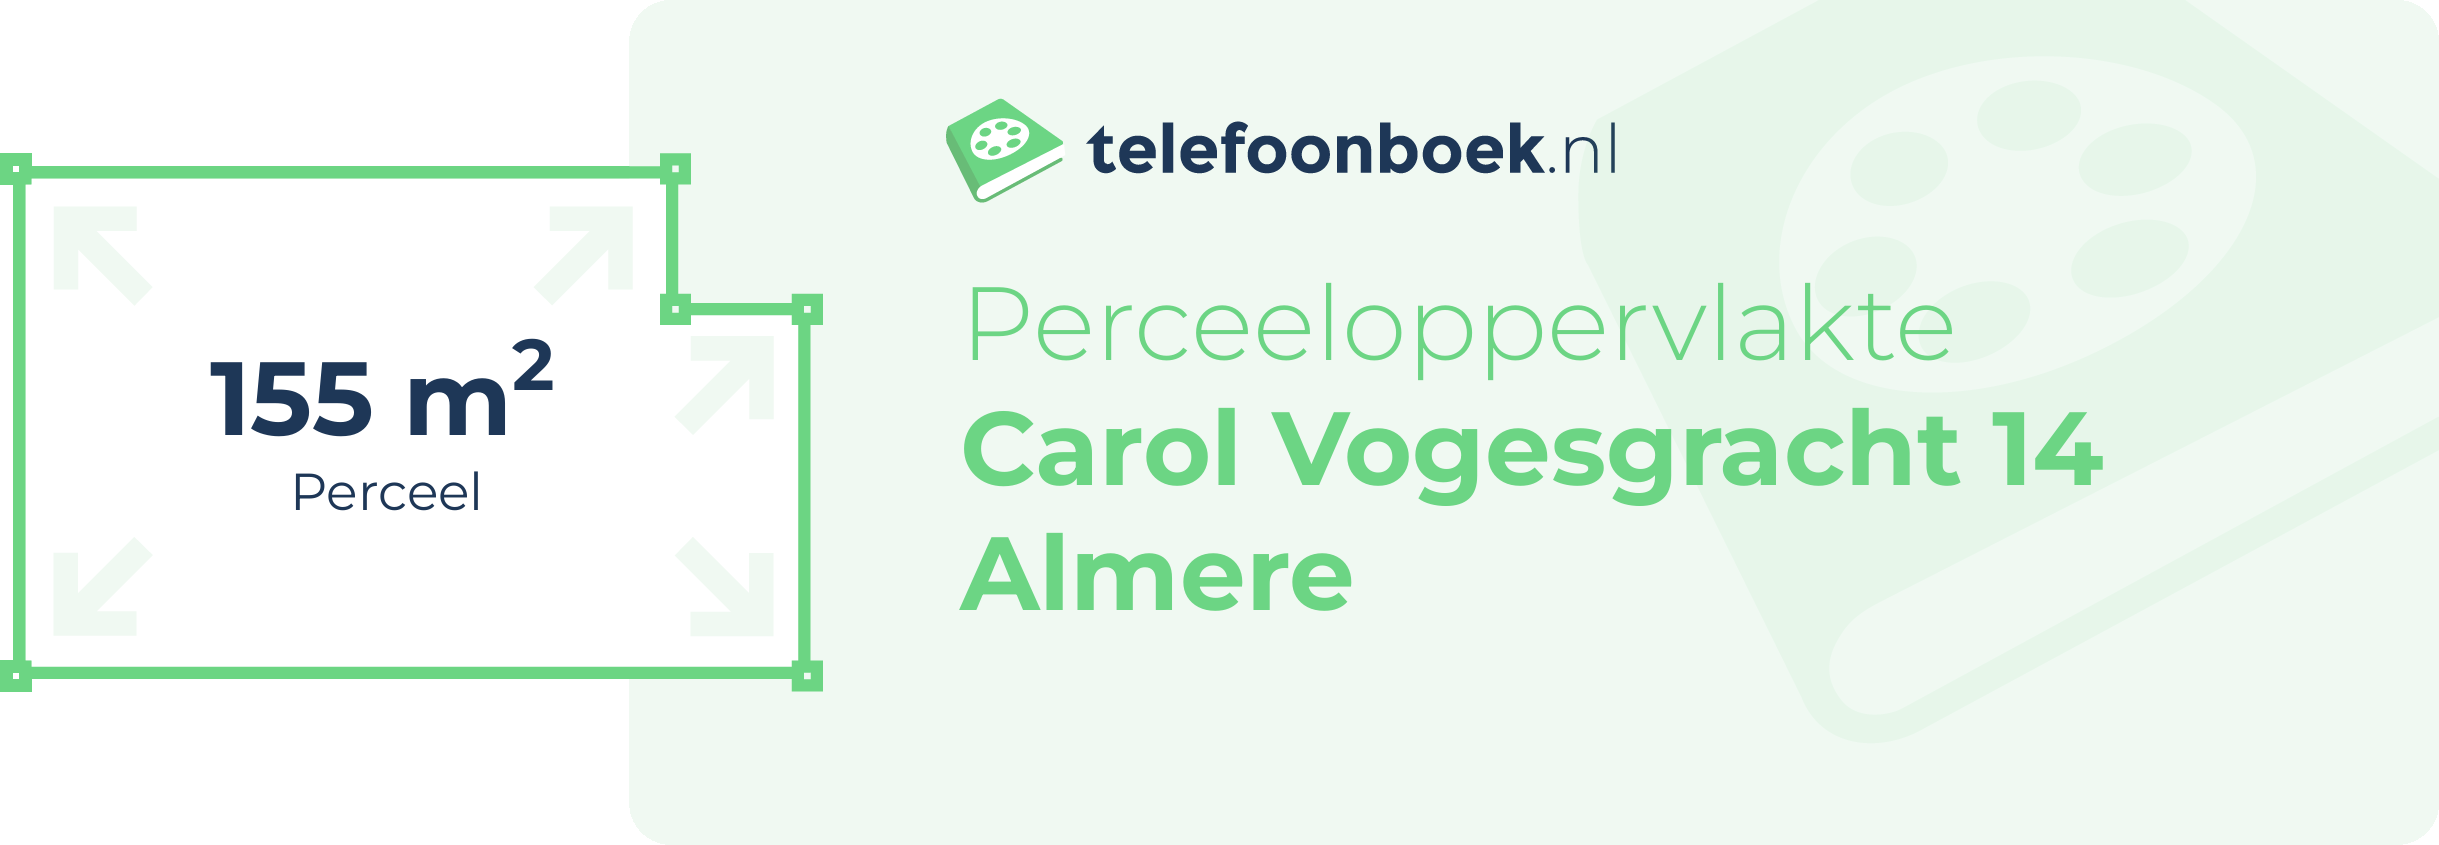 Perceeloppervlakte Carol Vogesgracht 14 Almere